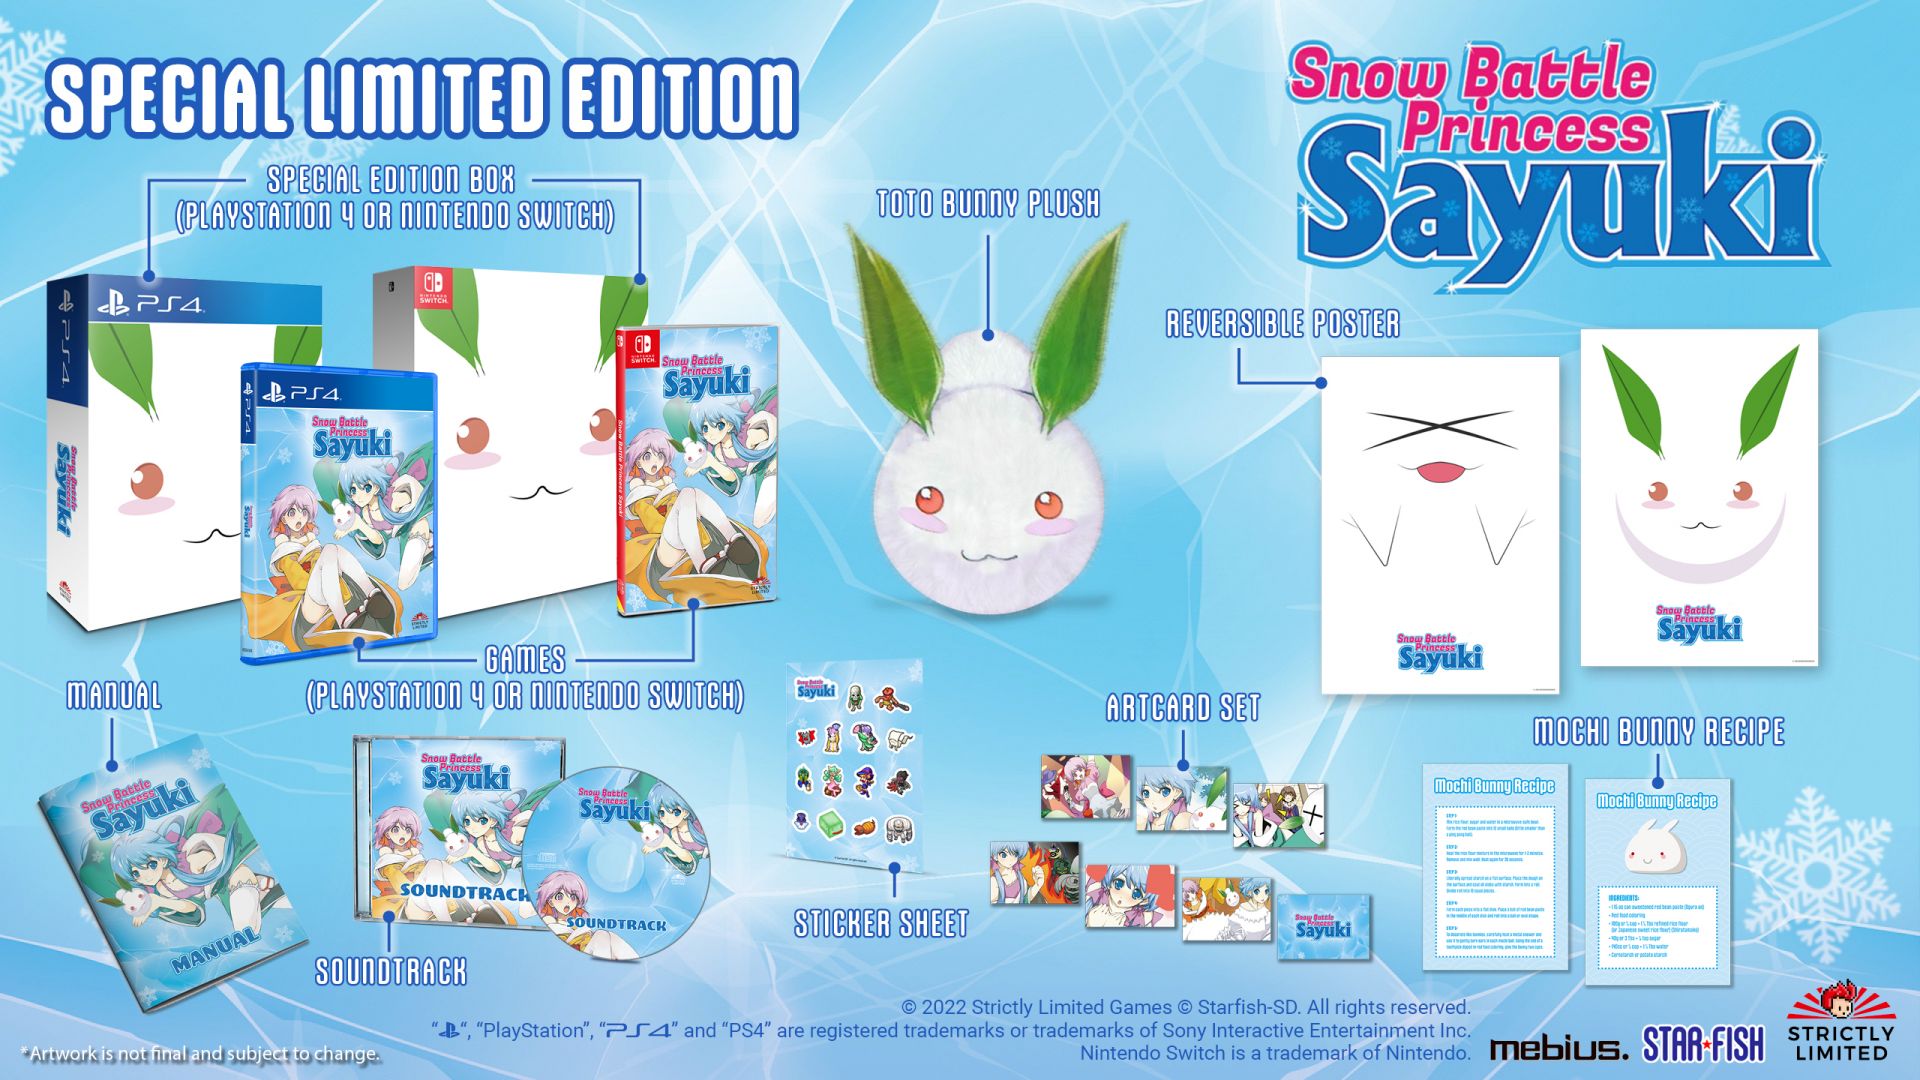 Snow Battle Princess Sayuki Special Limited Edition